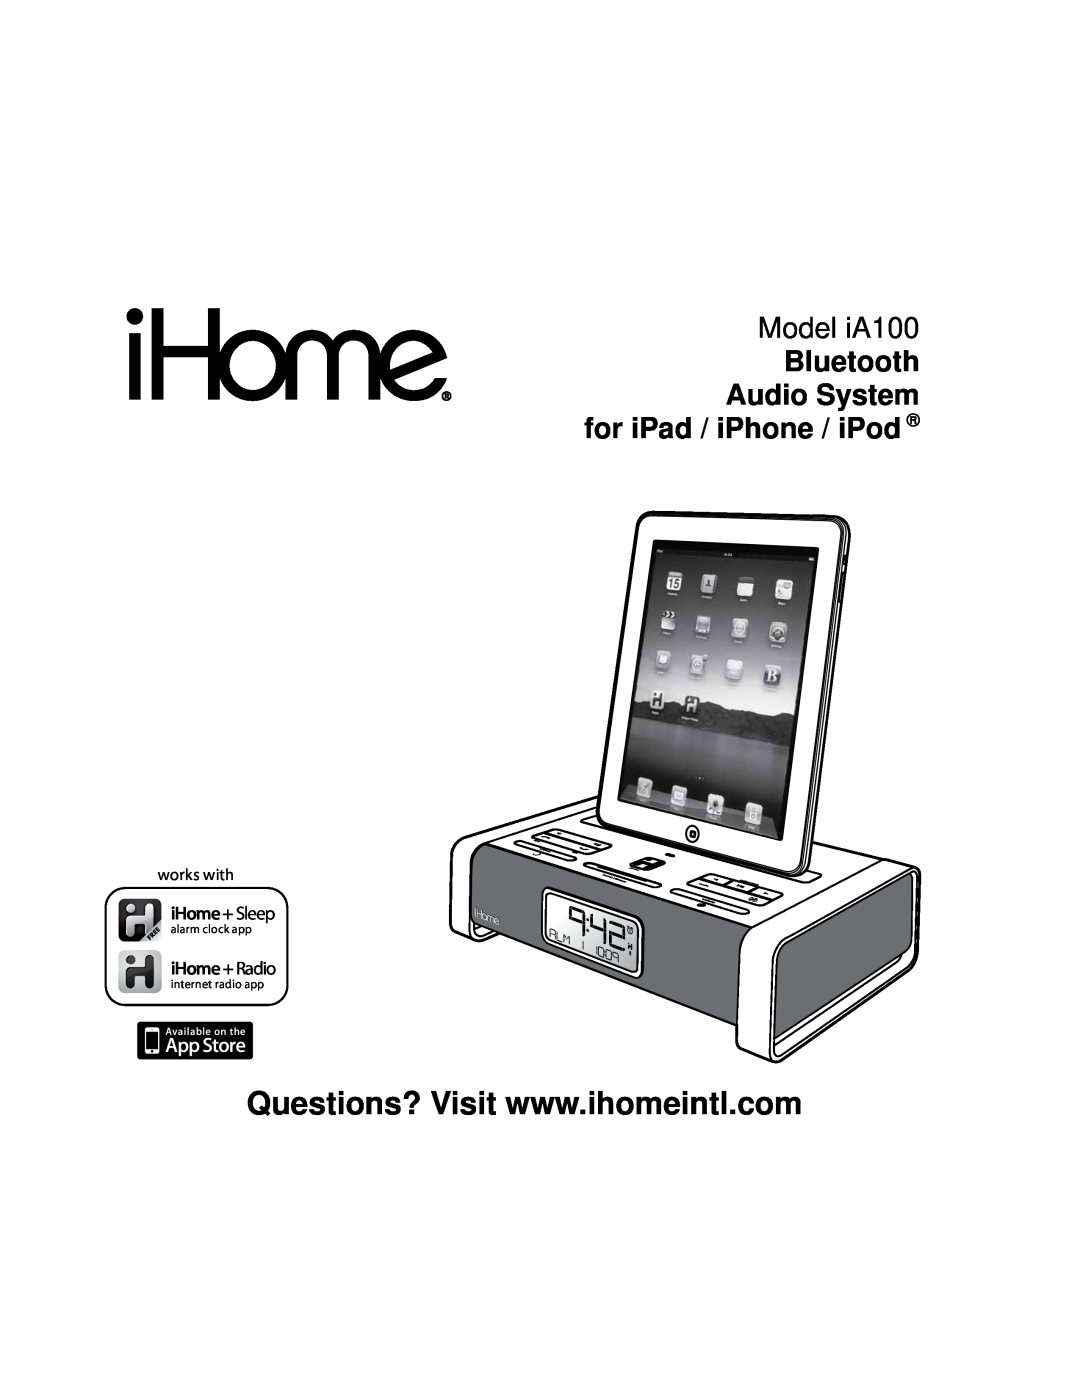 iHome manual Bluetooth Audio System für iPad / iPhone / iPod, Modell iA100, iHome + Sleep, iHome + Radio, works with 